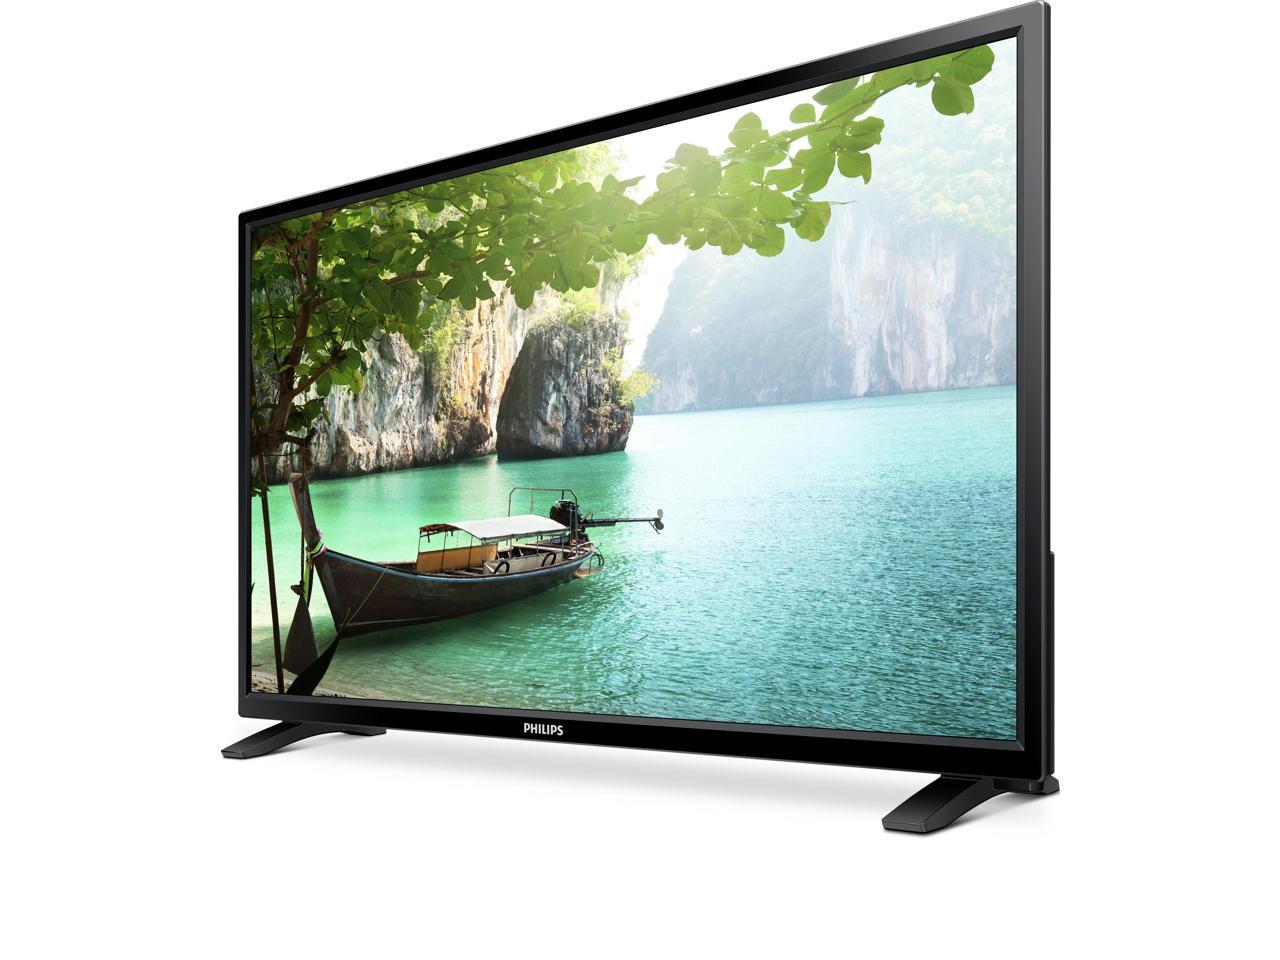 24 телевизор топ. Телевизор Филипс 24. Телевизор Philips 3000 4000 LCD Series. ТВ Филипс жидкокристаллический 42-7331. Kion телевизор 24" Smart TV (24h5l56kf) - черный.